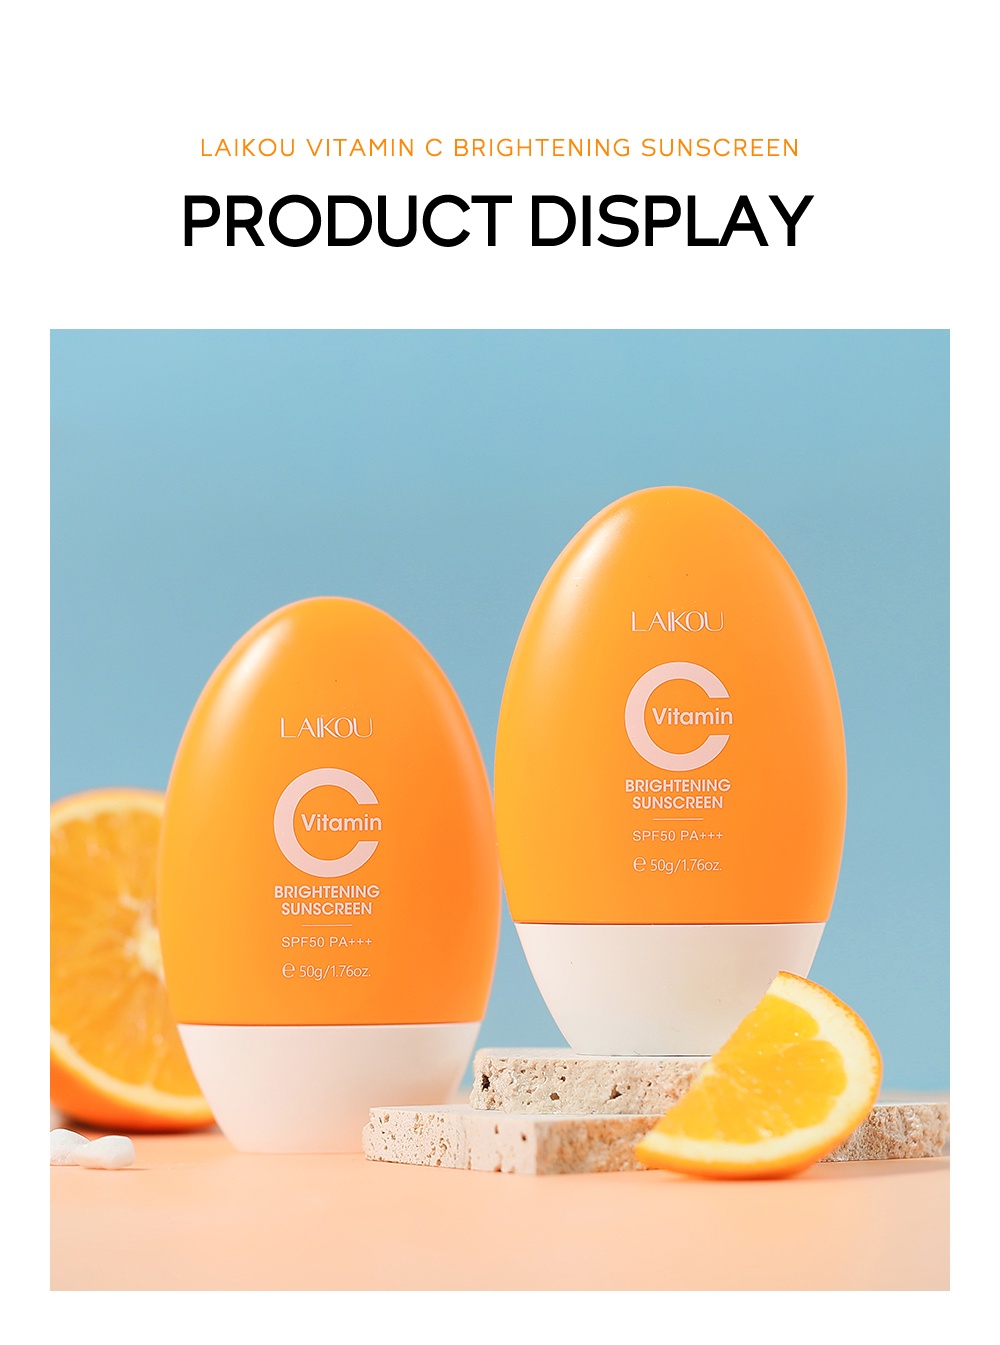 Laikou Vitamin C Sunscreen Brightening Uv Sunblock Spf50 Pa+++ 50G Sg 11134202 23010 18Lz9Pauc1Lv6D